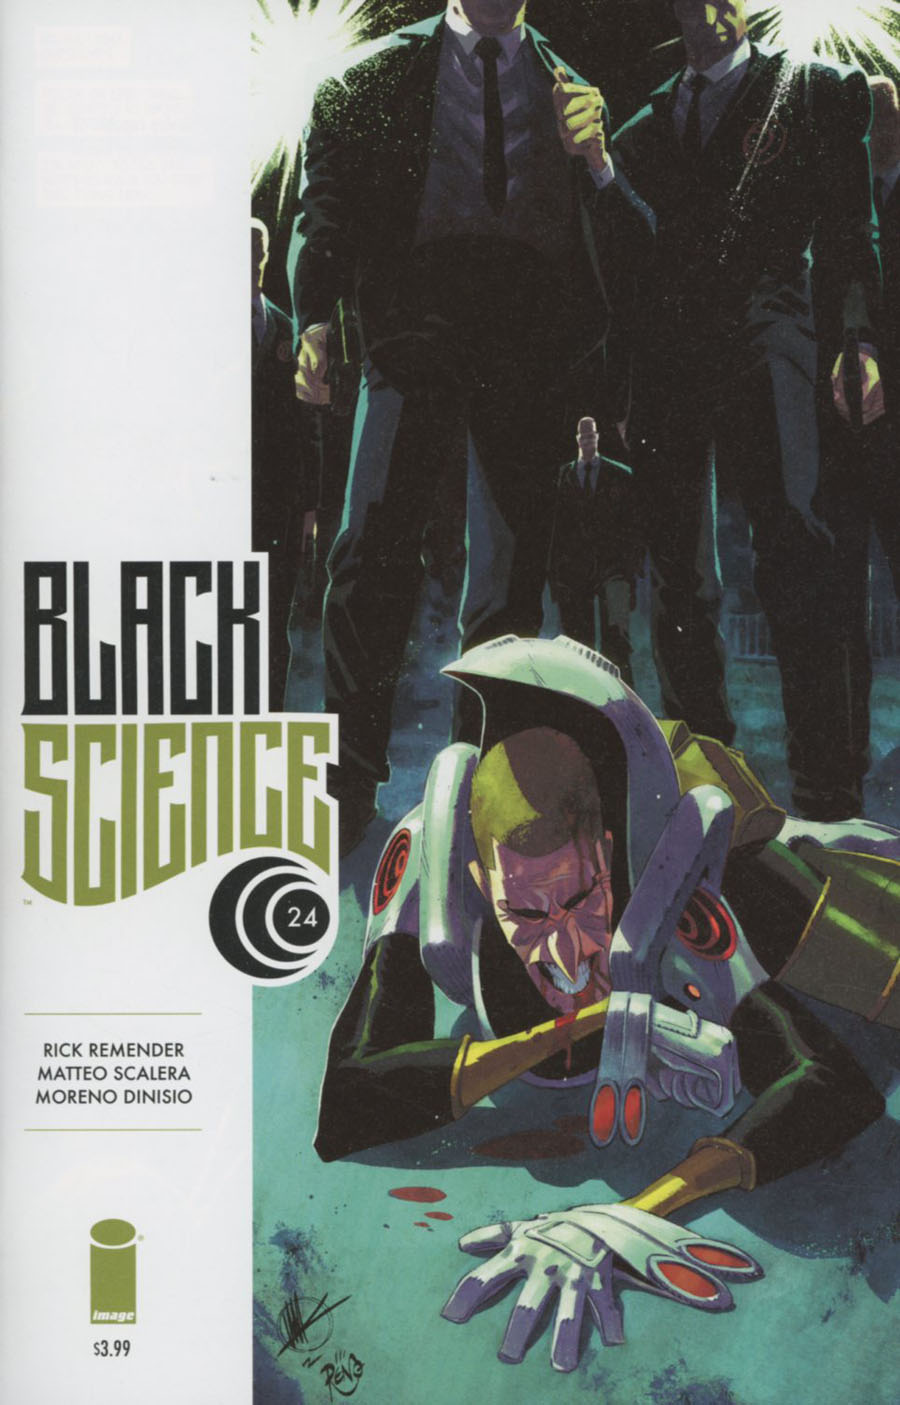 Black Science #24